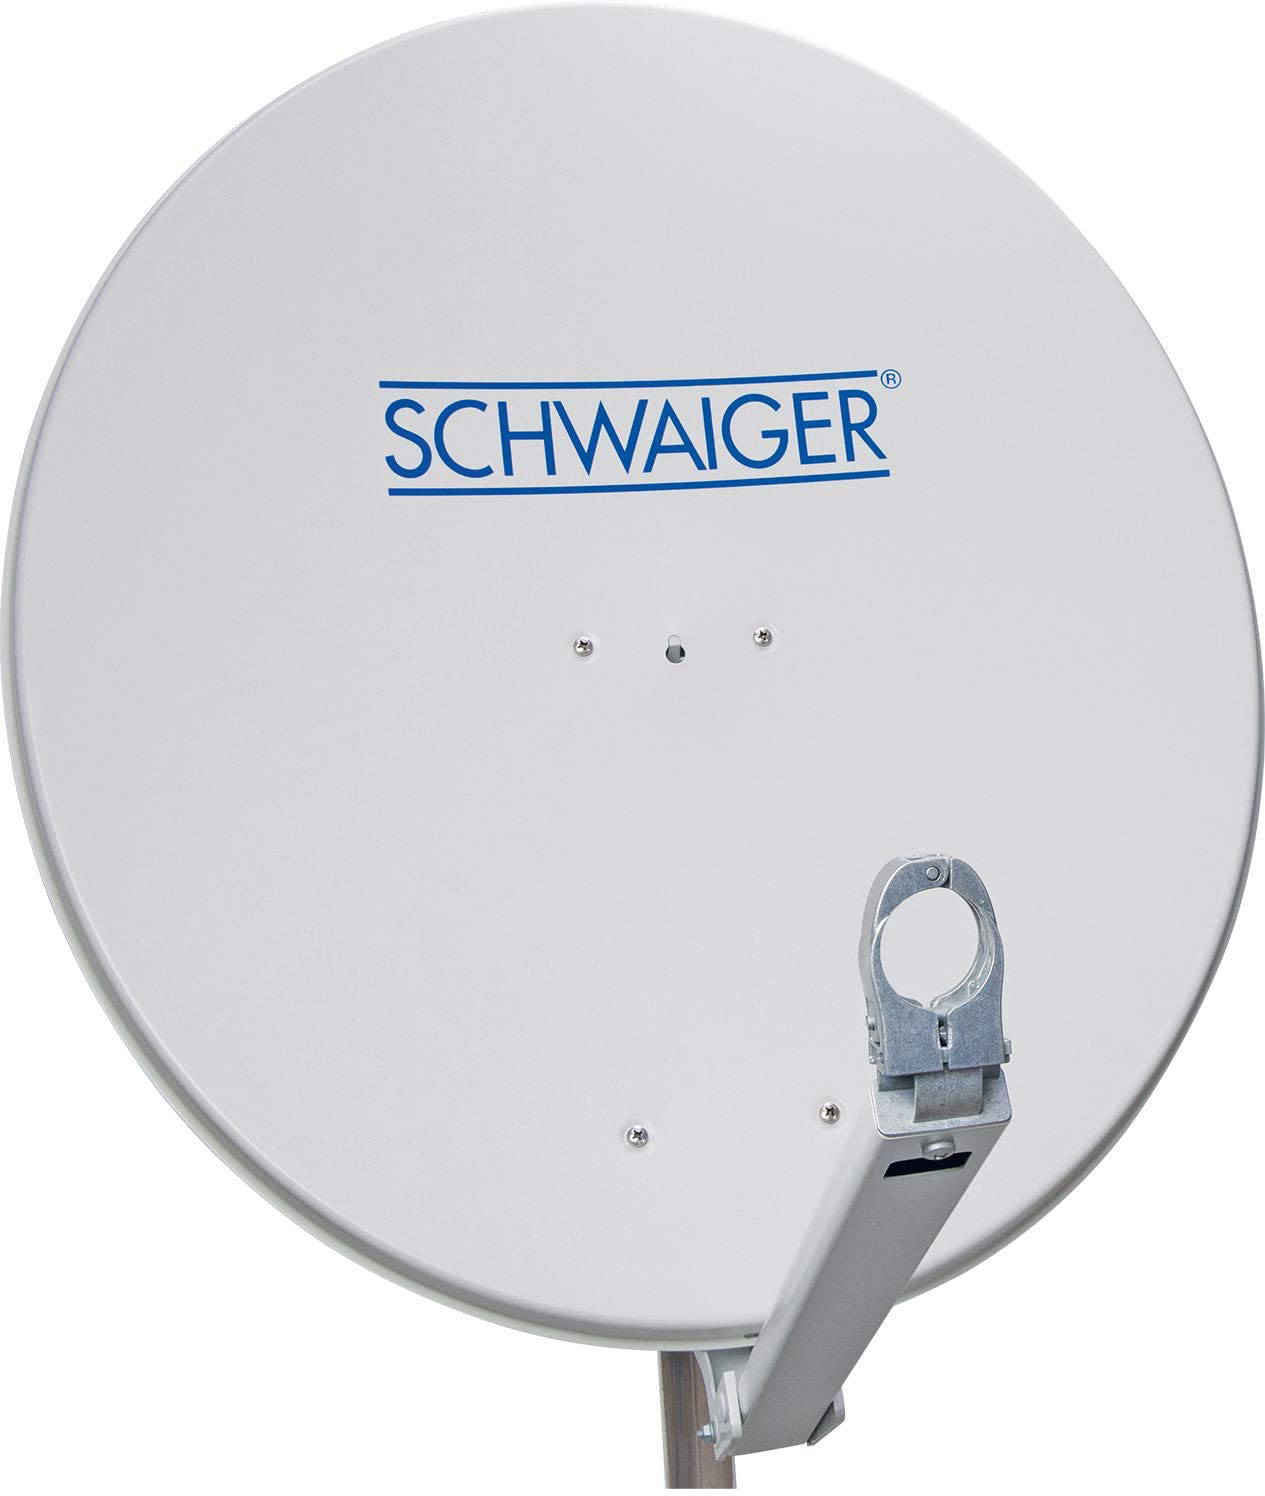 SCHWAIGER -SPI710.0- Aluminium Offset Antenne cm) (75